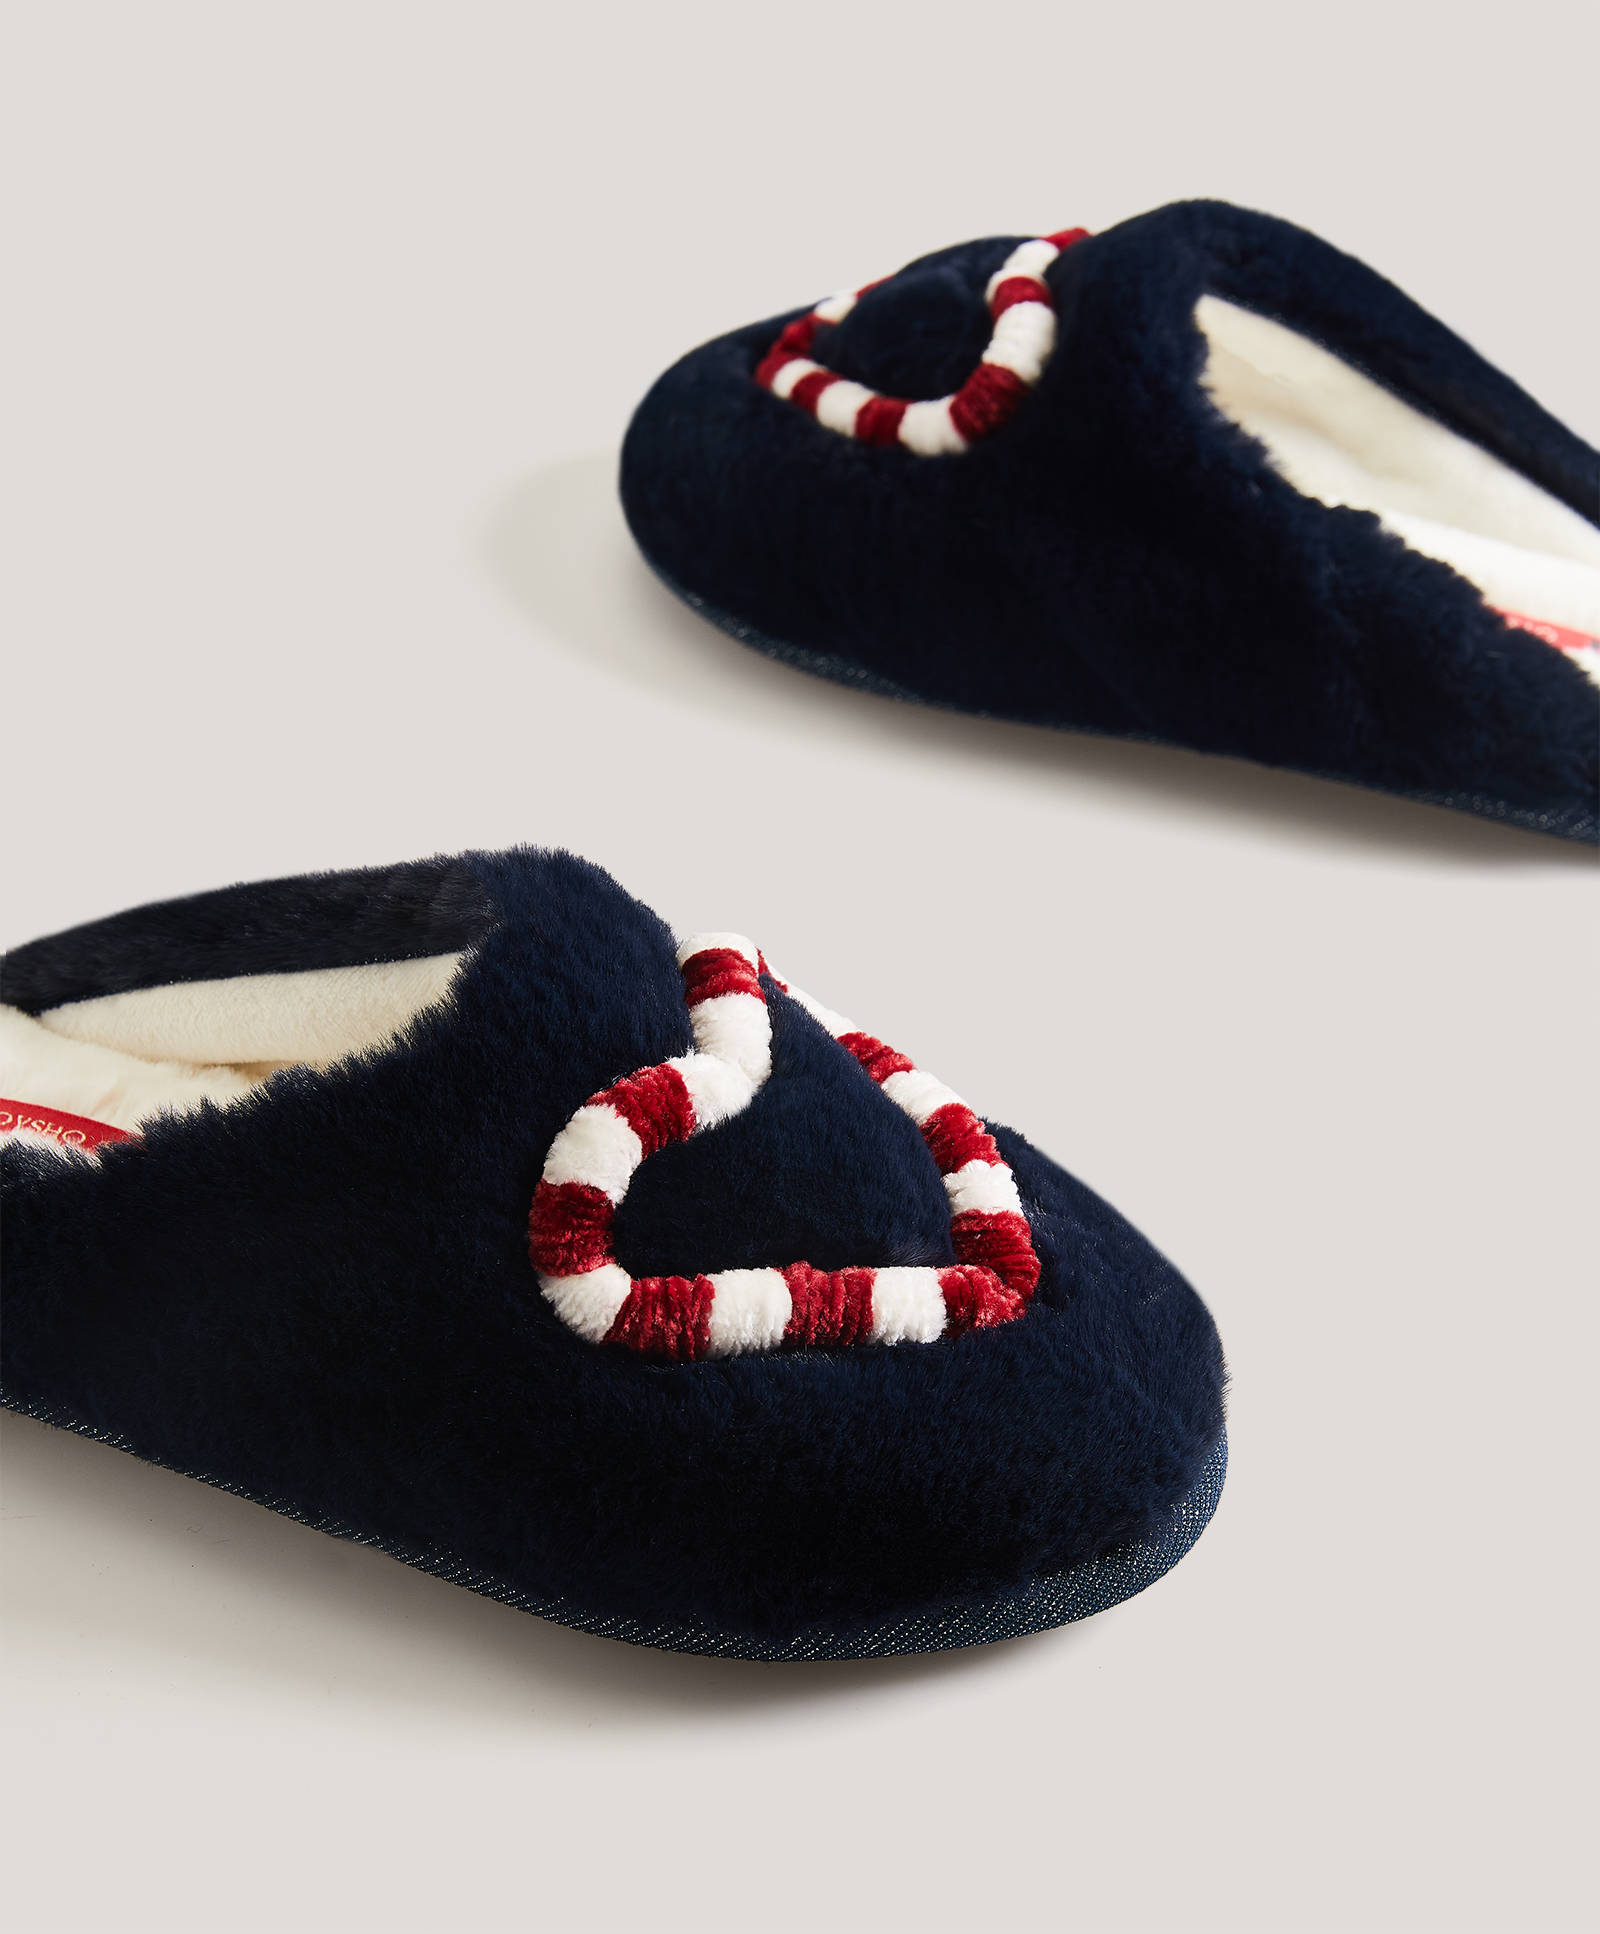 Modalite.net - Oysho - Candy cane slippers